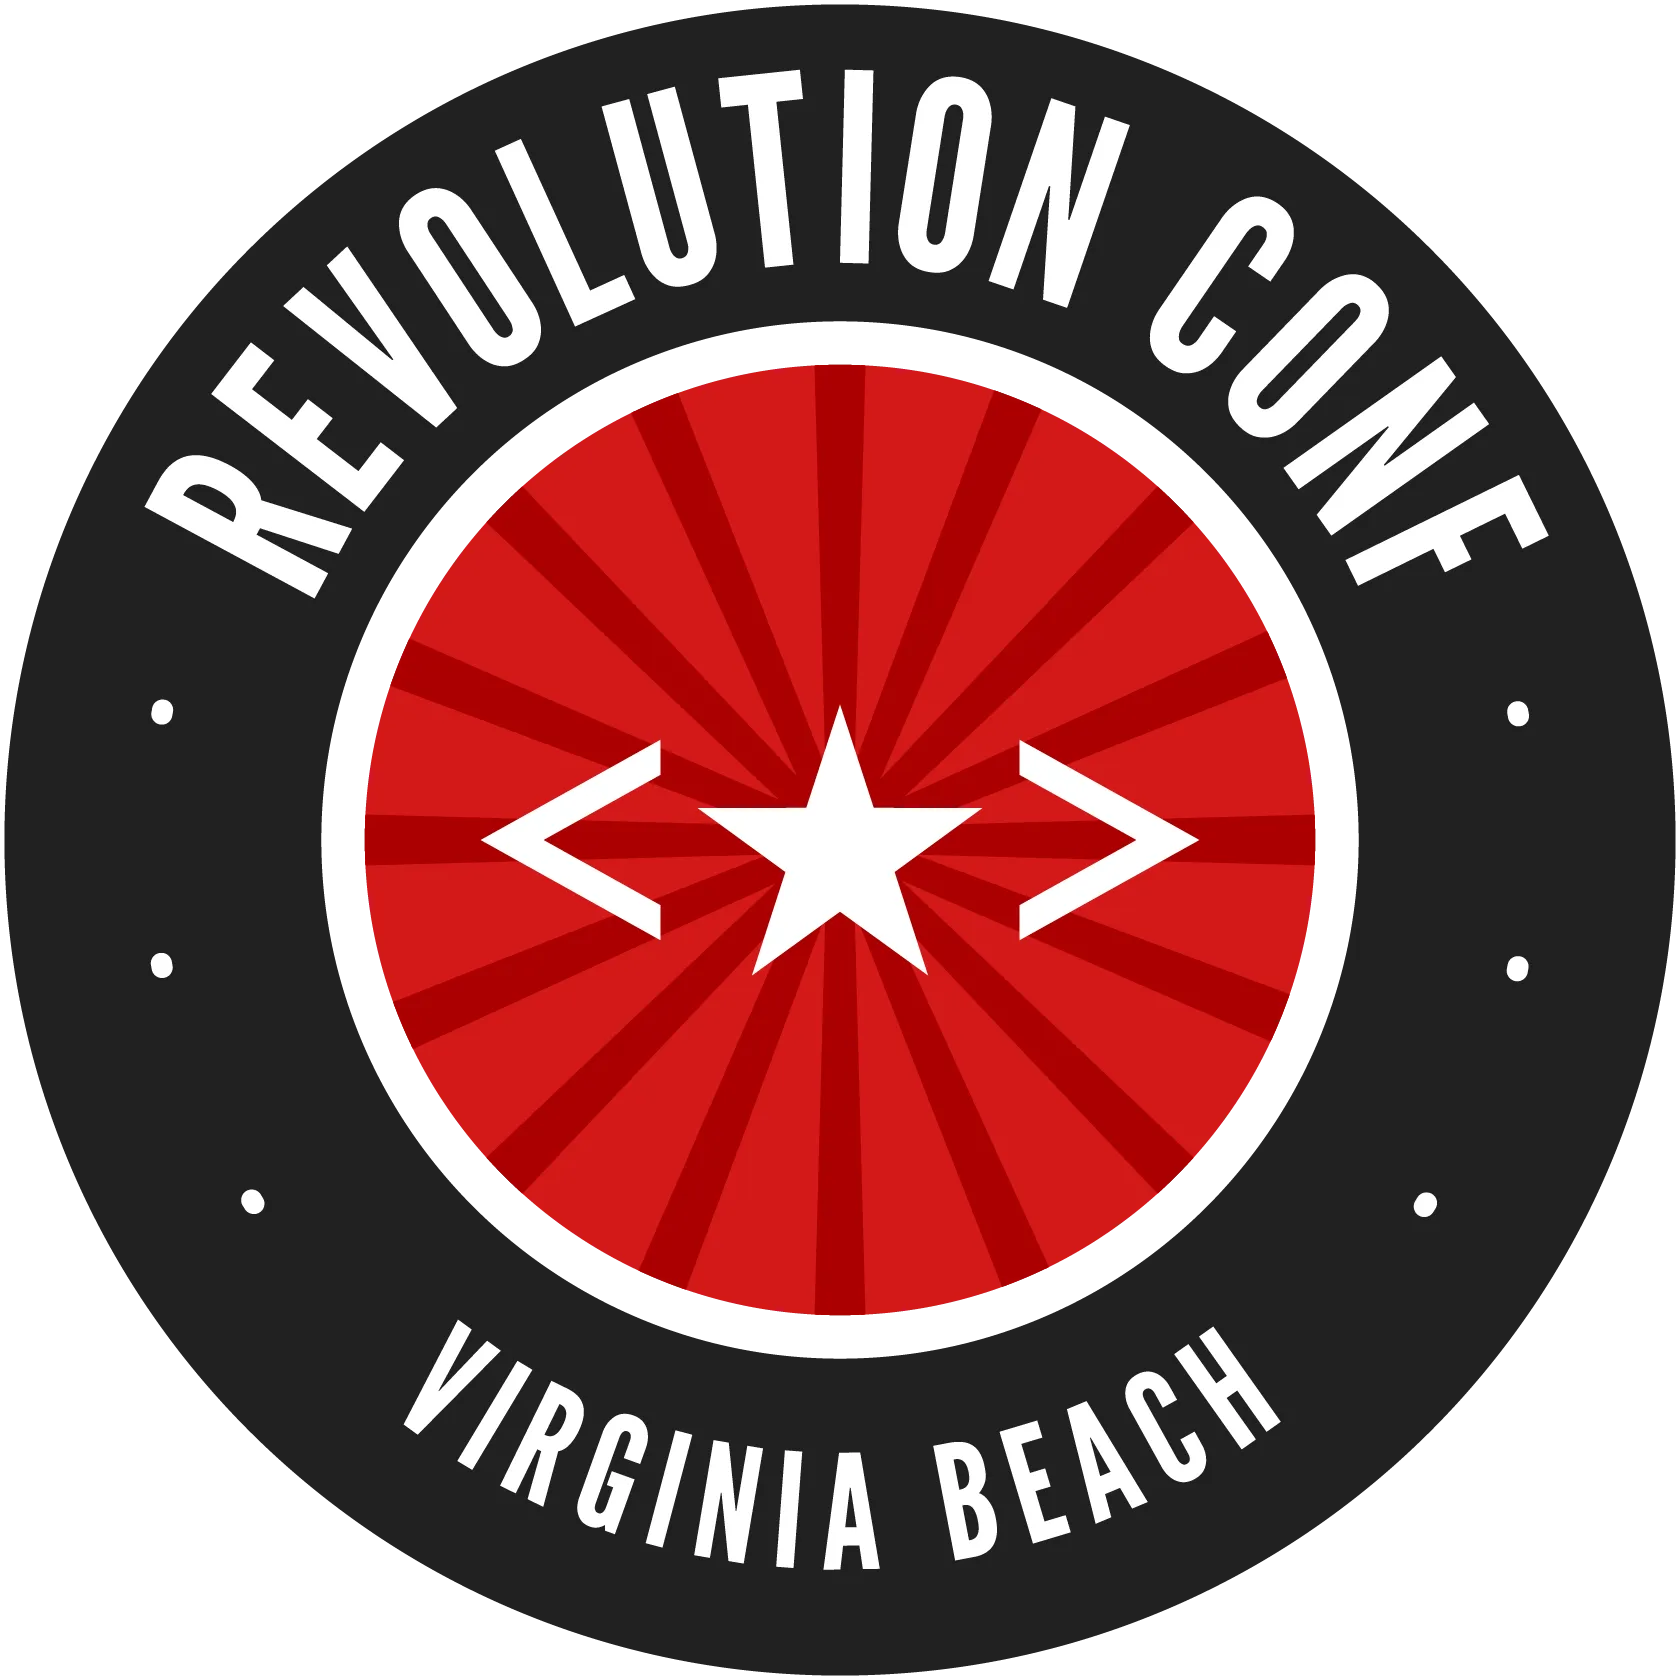 RevolutionConf Logo